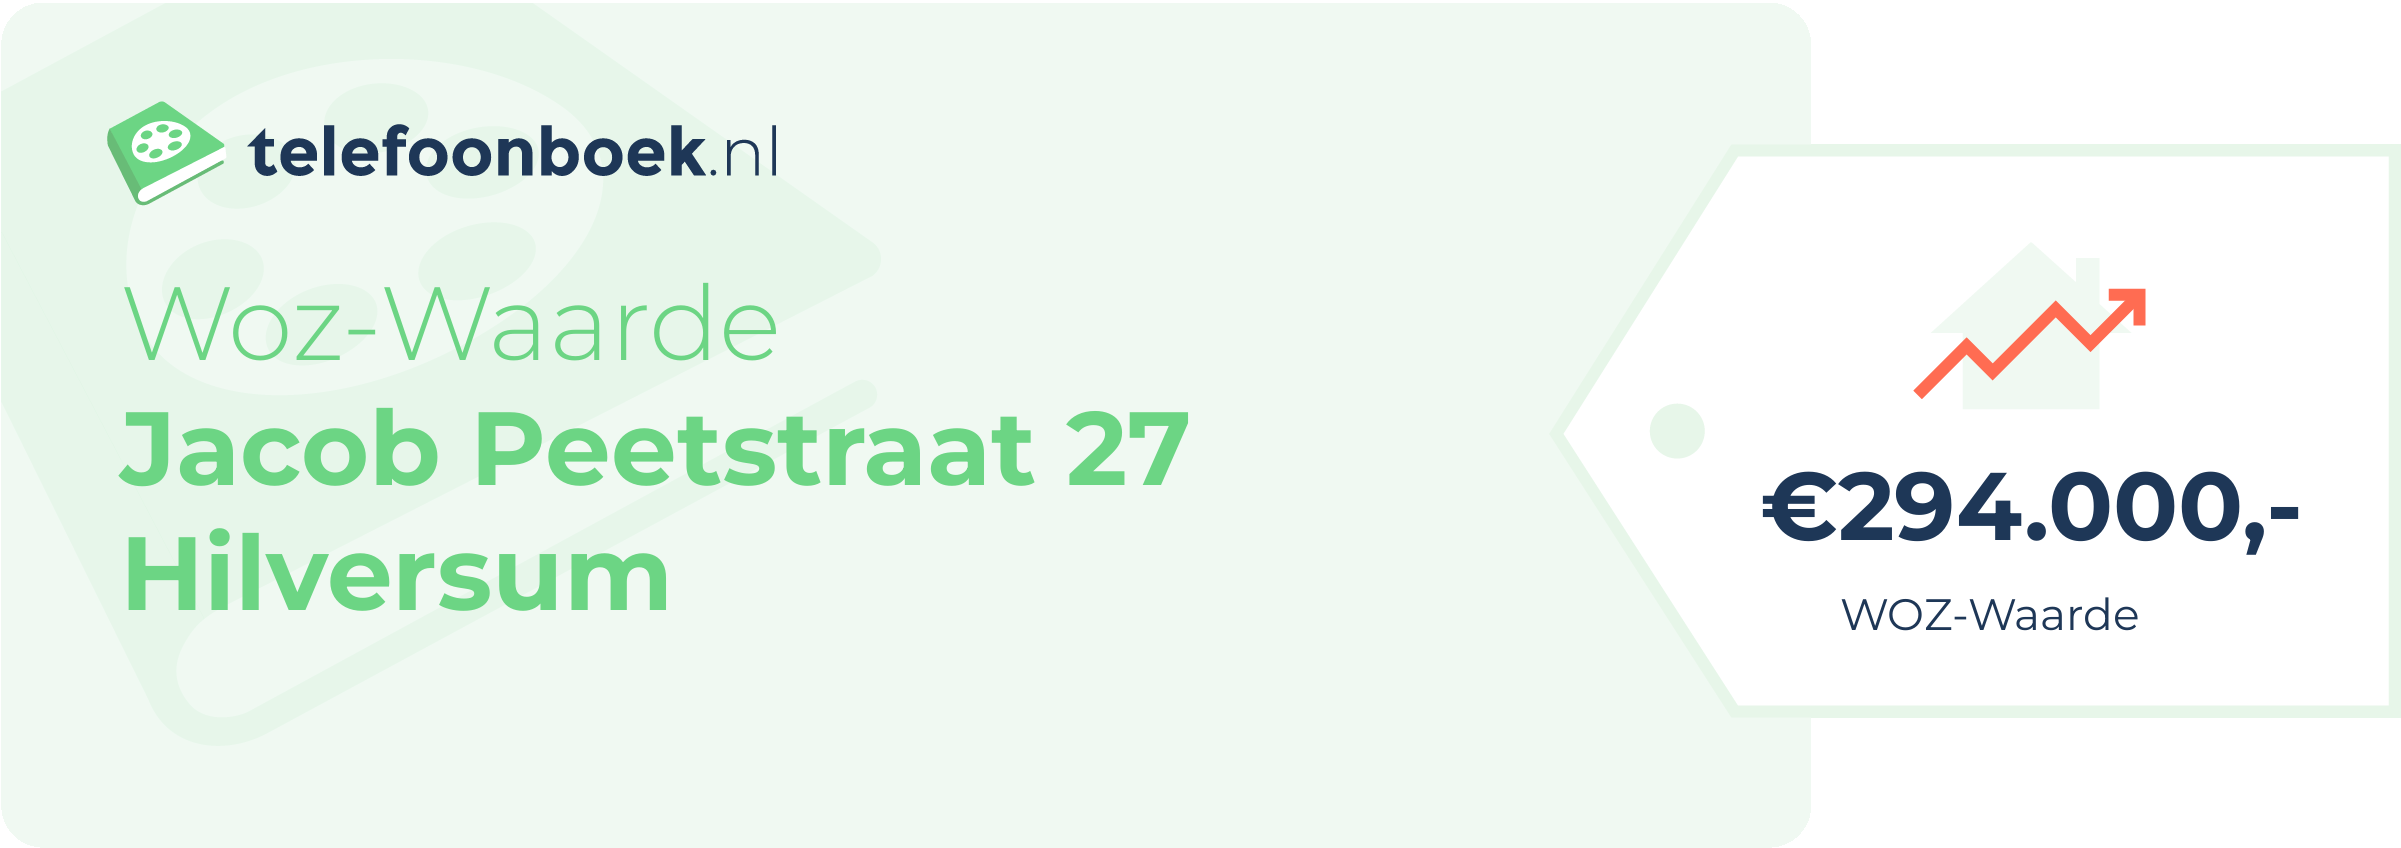 WOZ-waarde Jacob Peetstraat 27 Hilversum